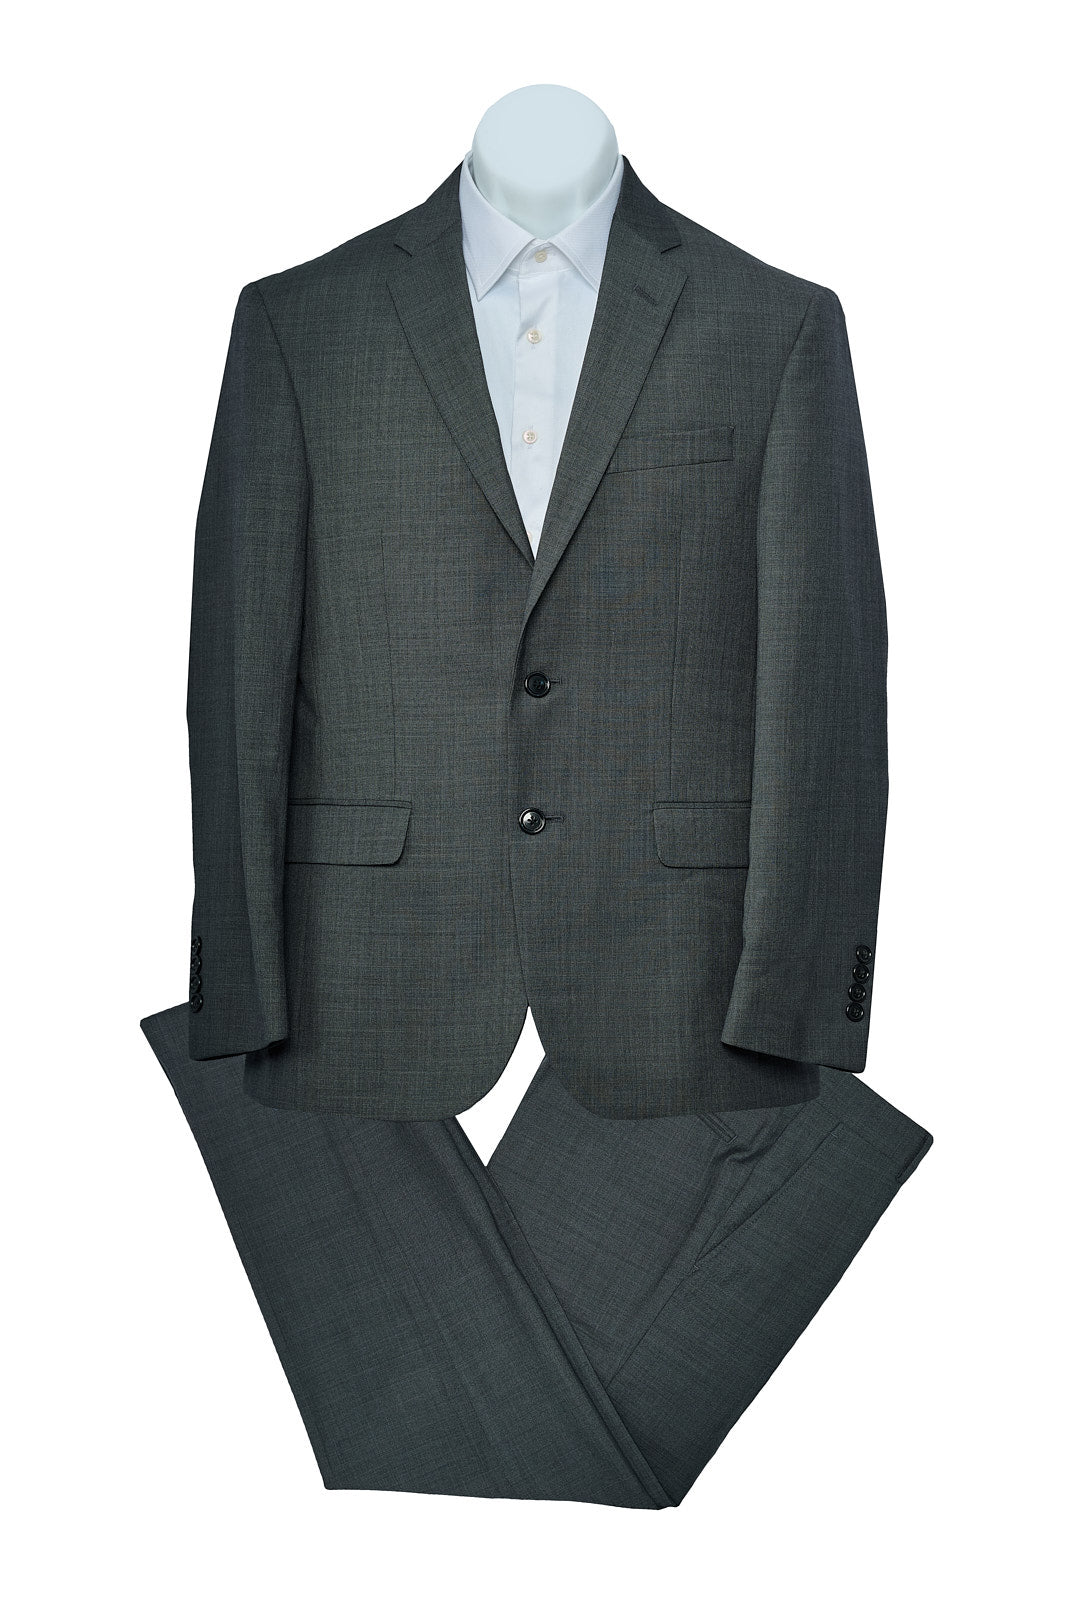 Textured Gray Suit